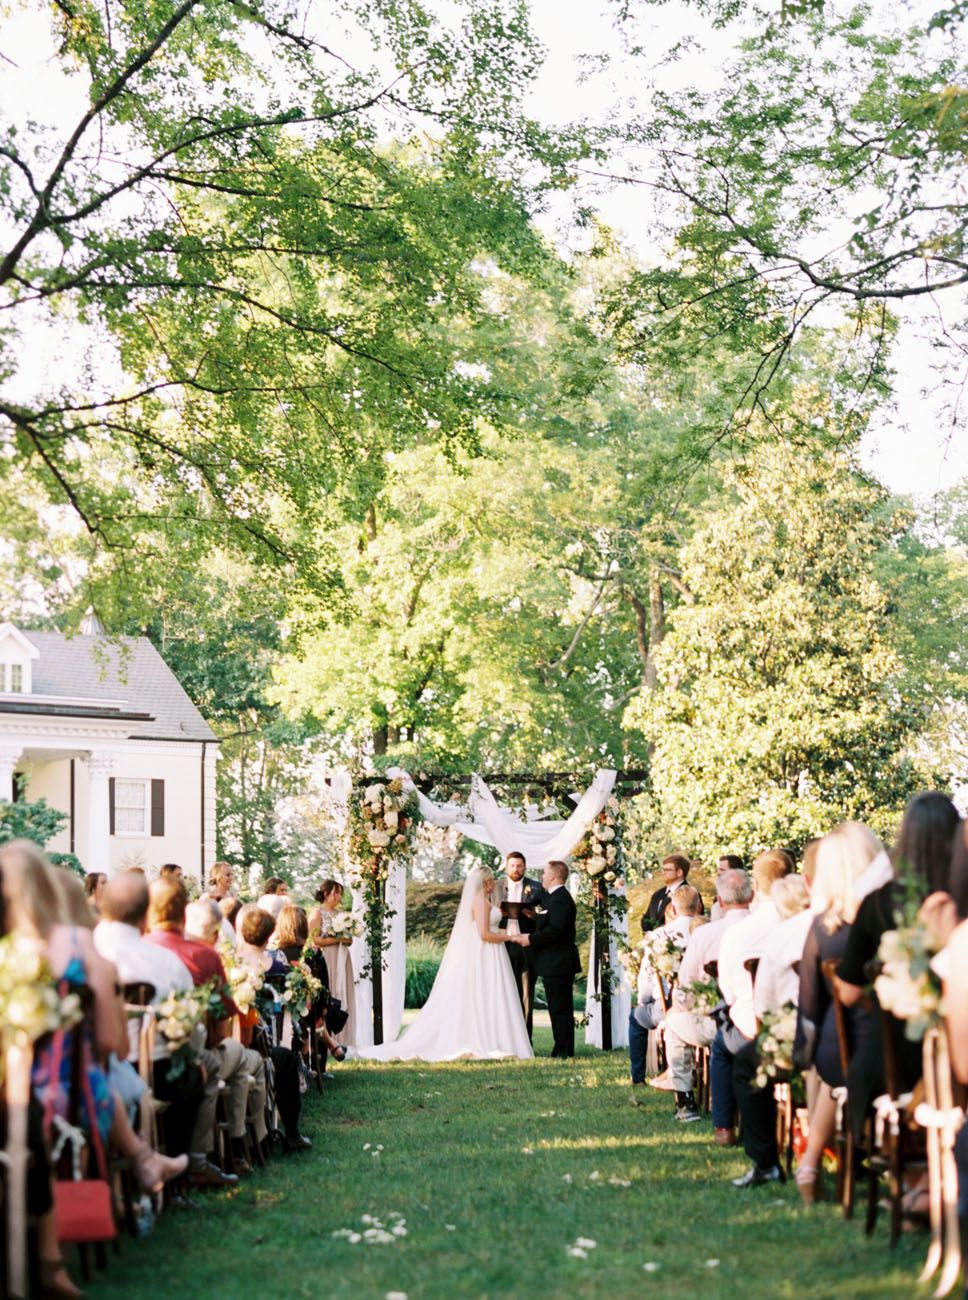 Romantic Summer Wedding Ceremony Under Willow Oak Canopy